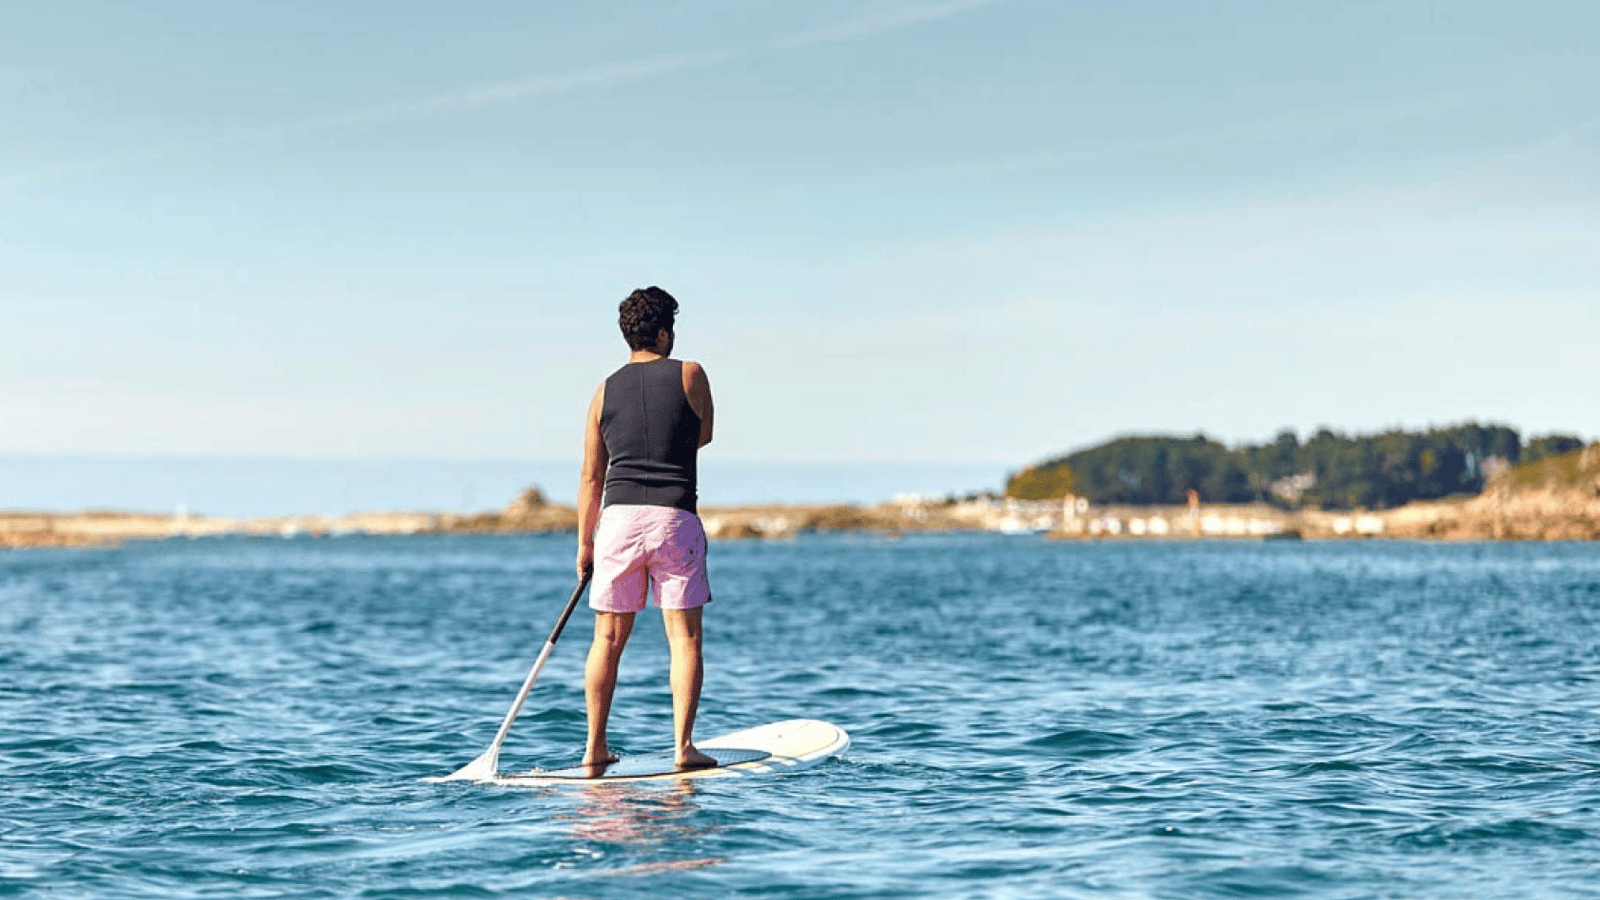 Fond rubrique kayak paddle